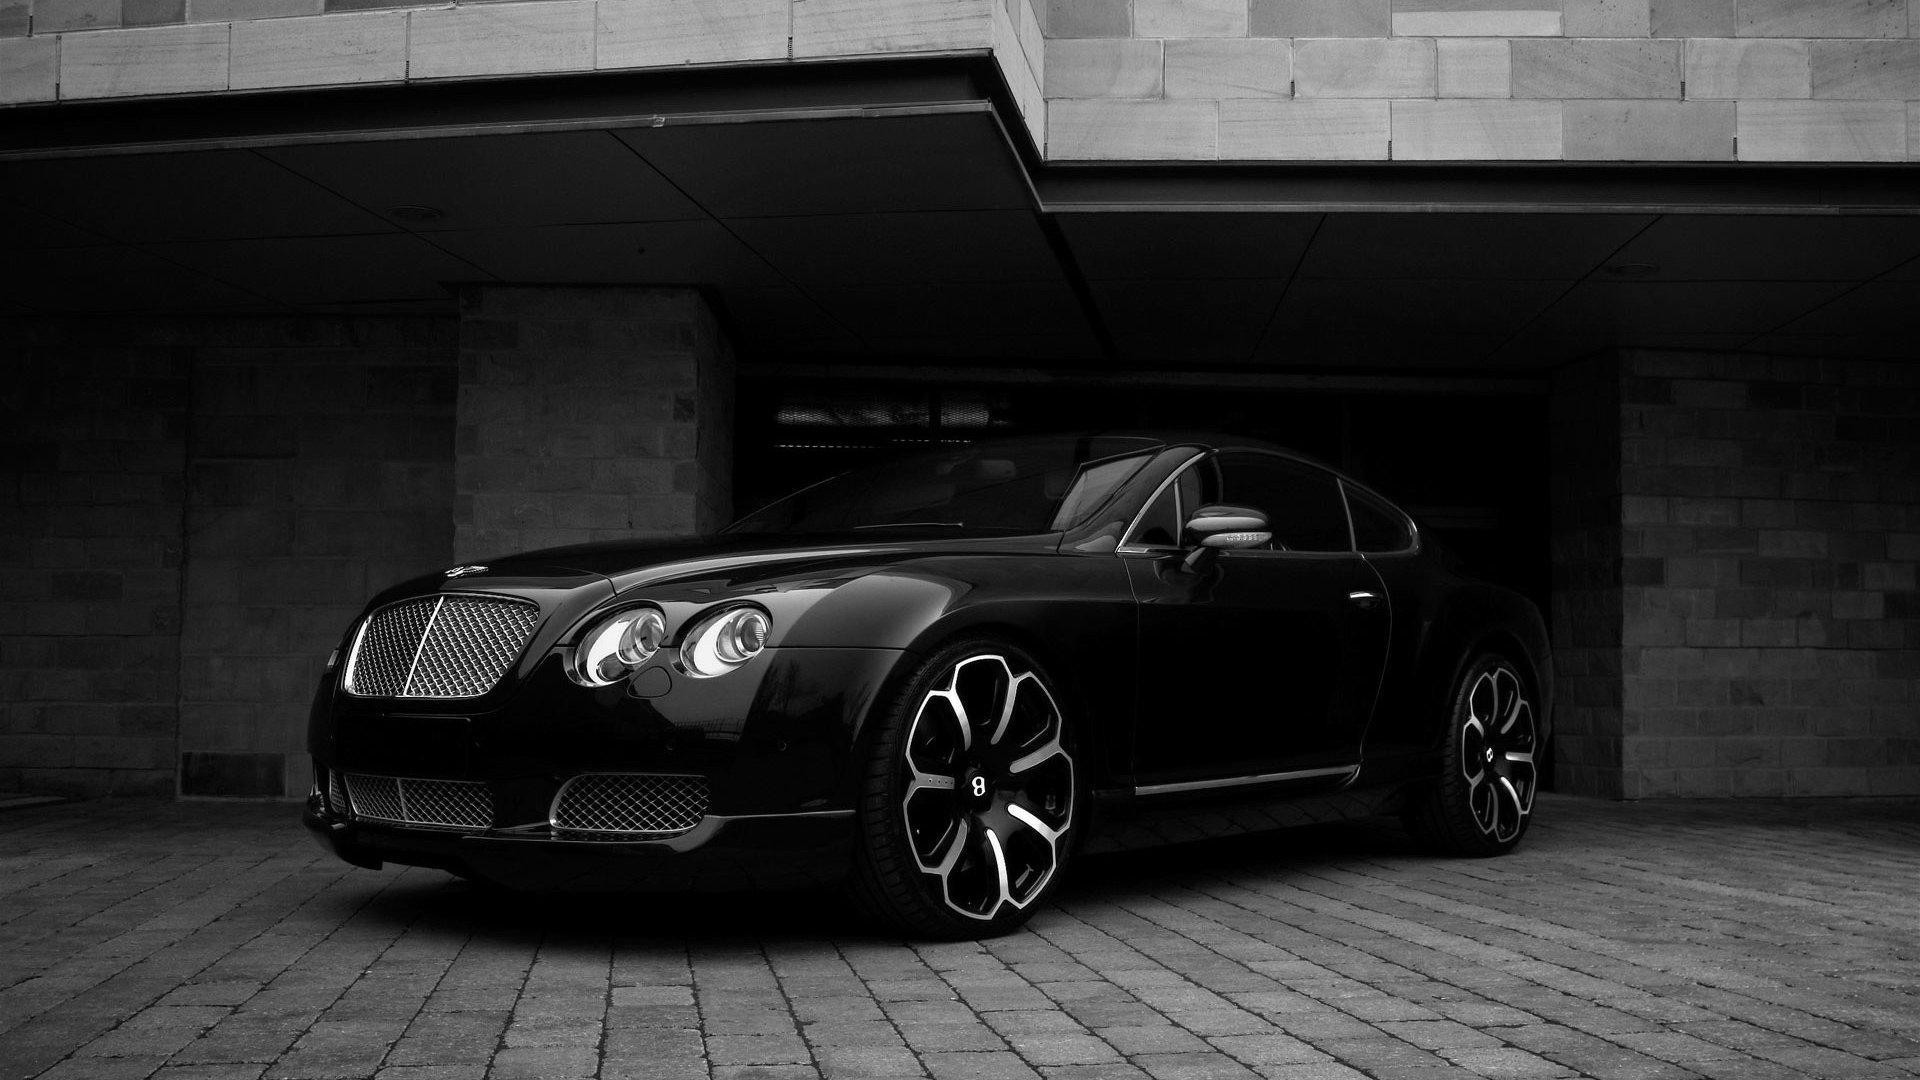 1920x1080 Black Bentley Front Angle #Angle #Bentley #Black #Car #Front #wallpaper